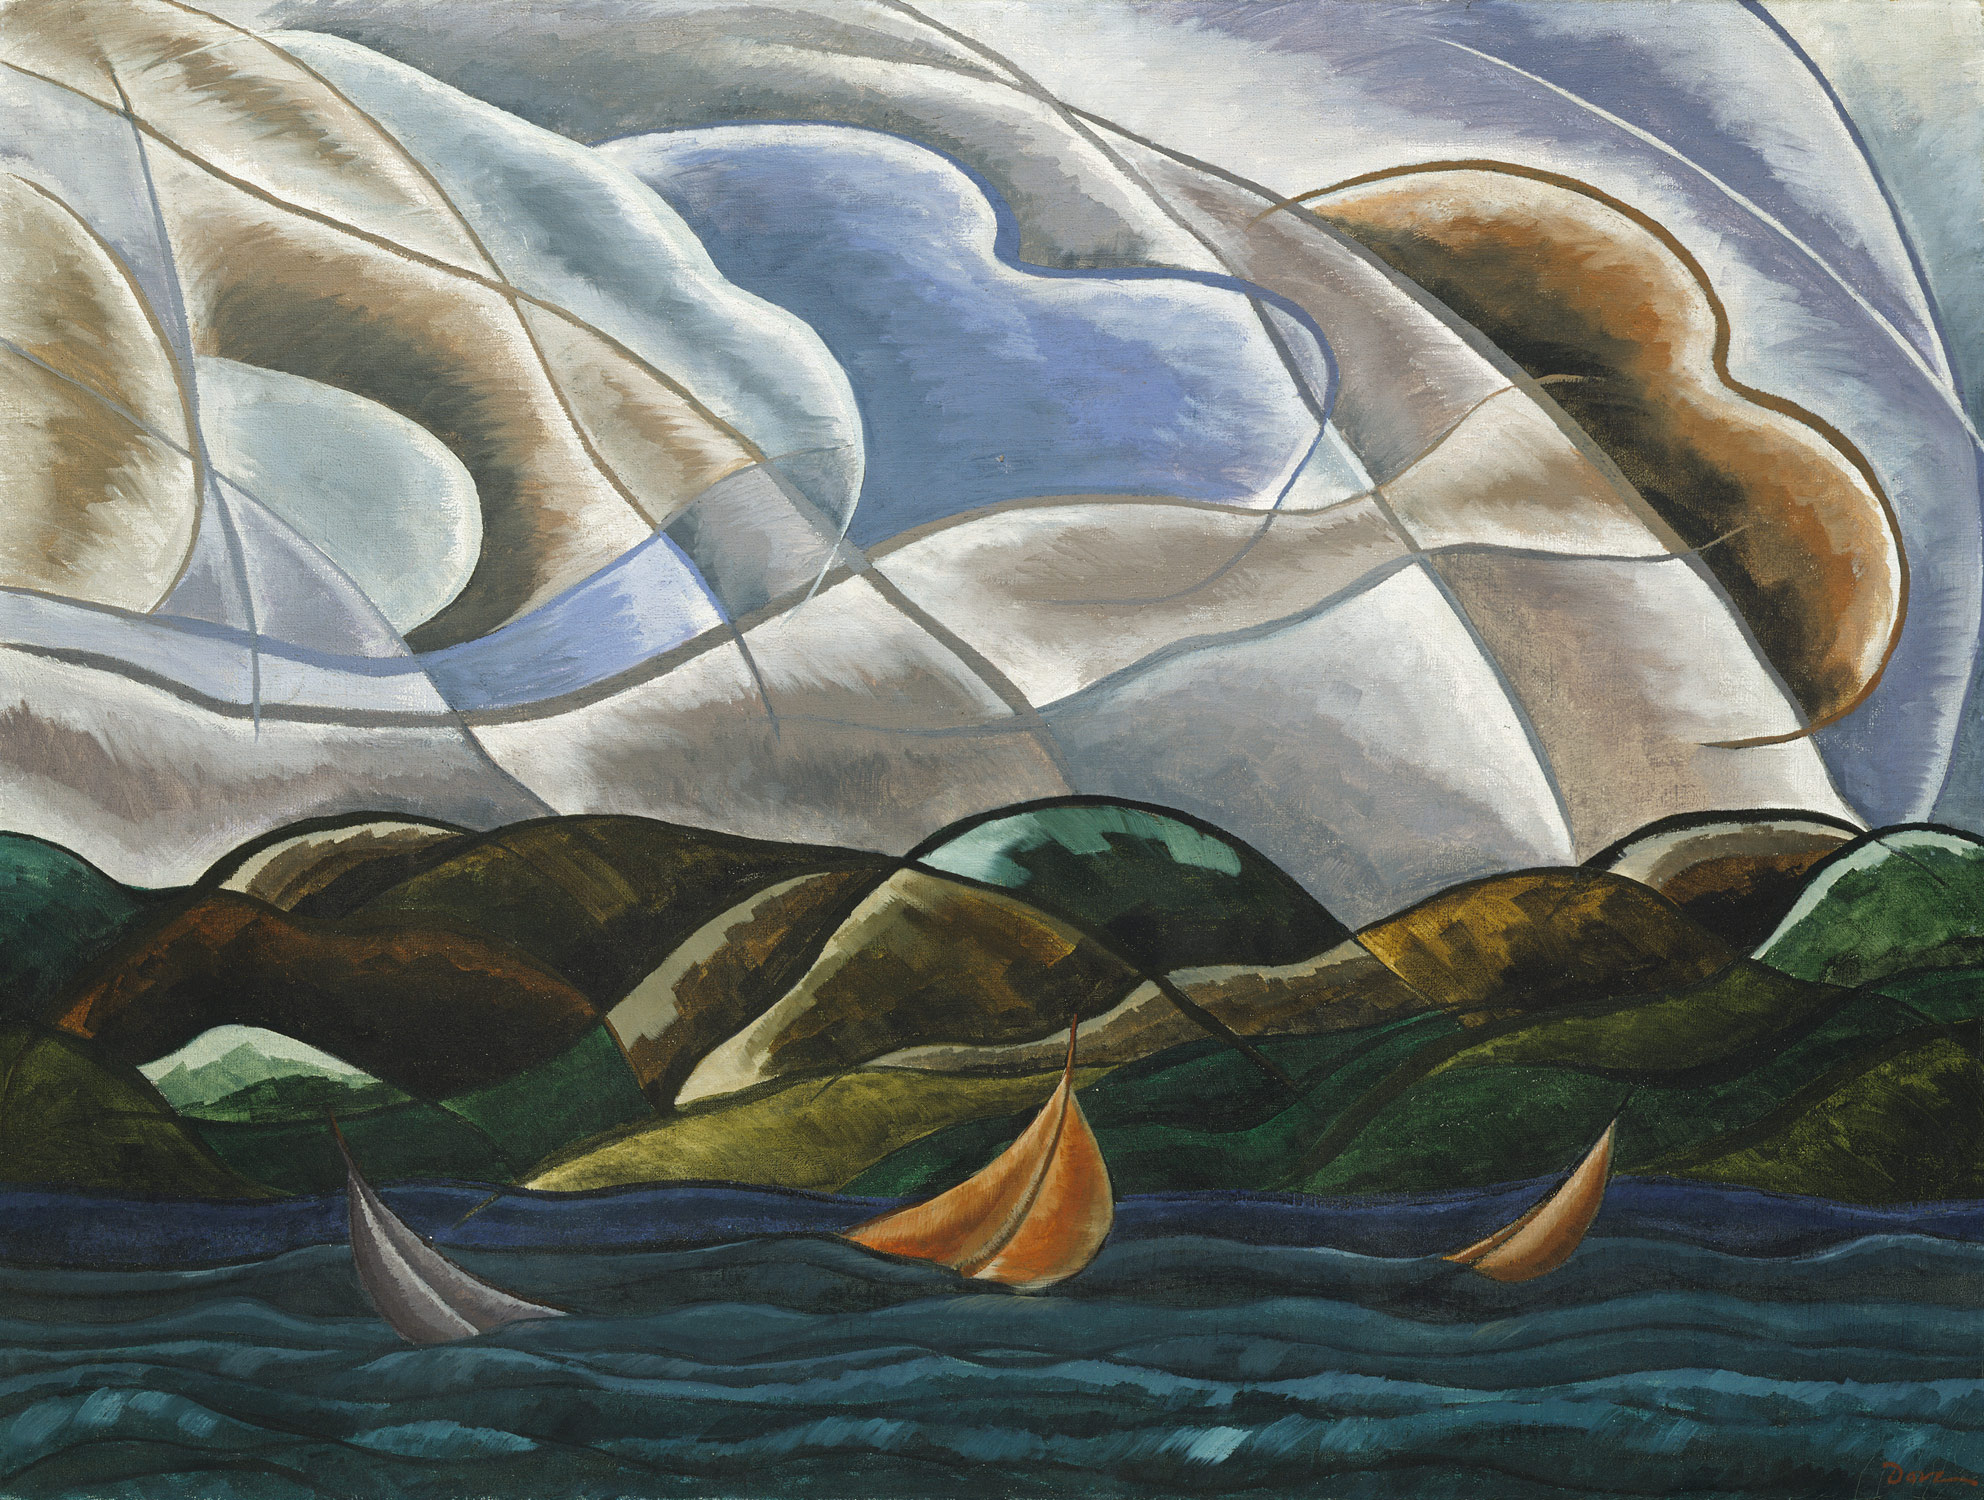 ابر و آب by Arthur Dove - 1930 - 75.2 x 100.6 cm 